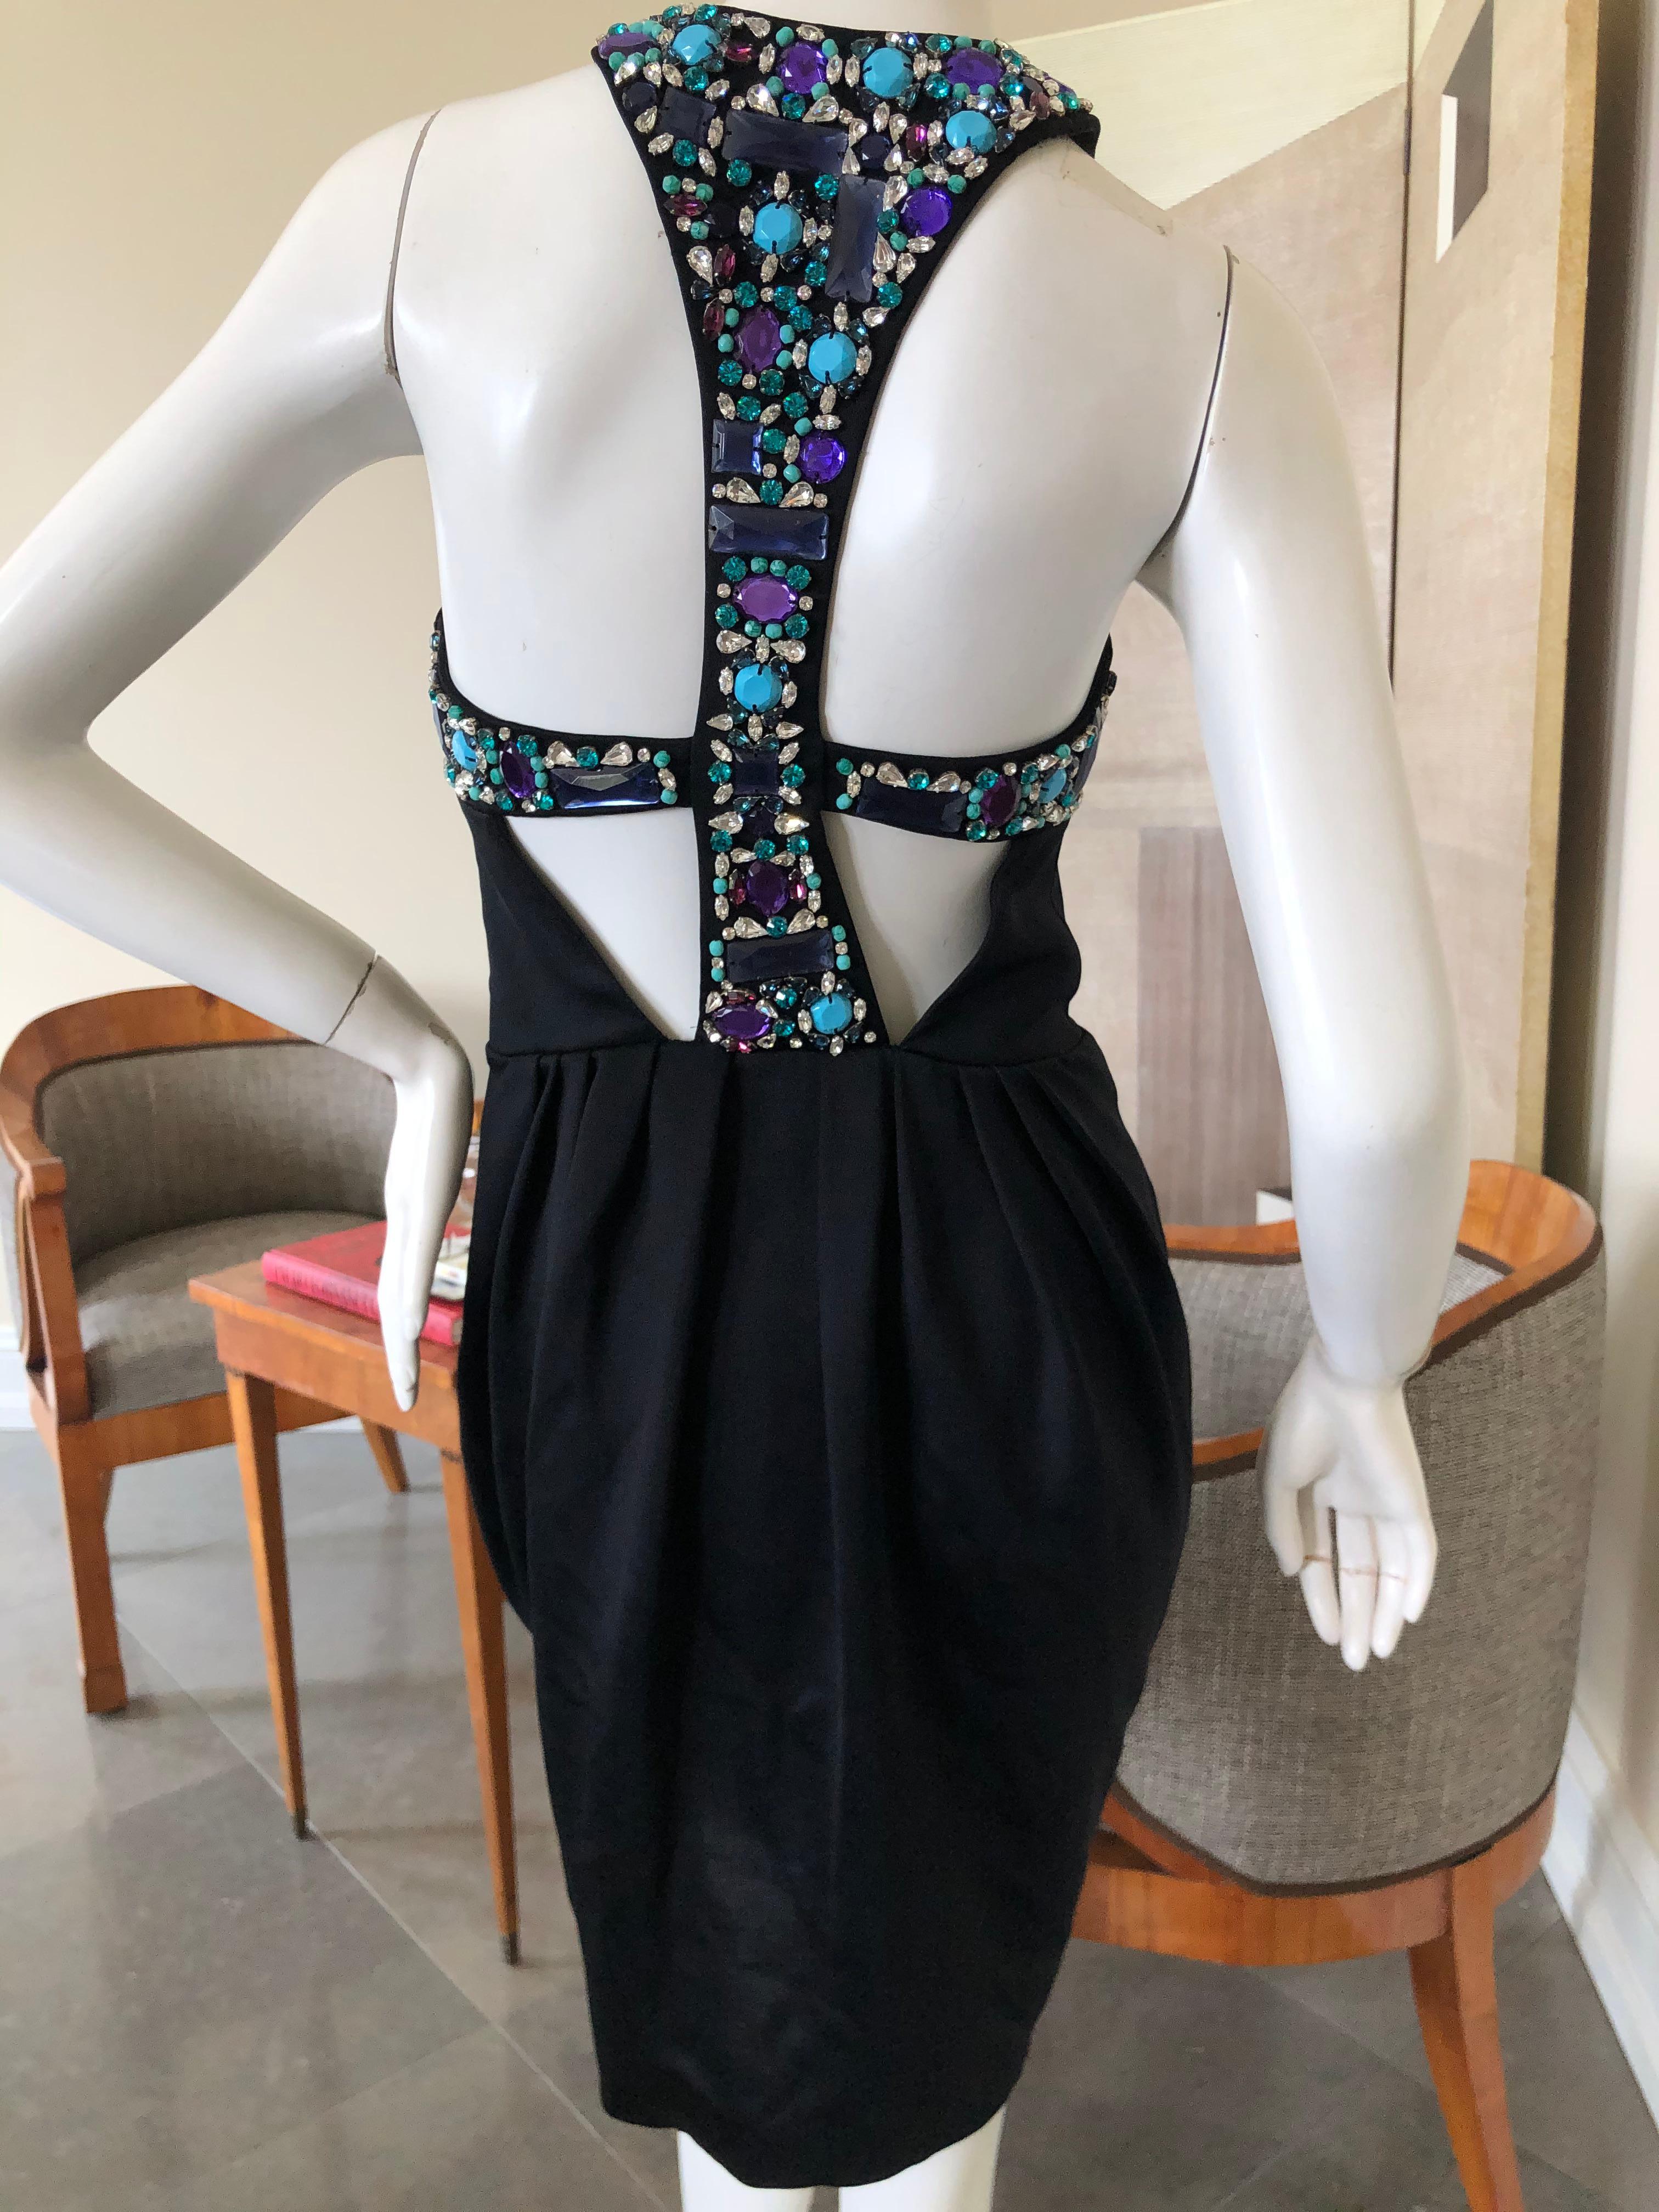 Emilio Pucci Lacroix Era Little Black Dress w Gobsmacking Jewel Embellishments In Excellent Condition For Sale In Cloverdale, CA